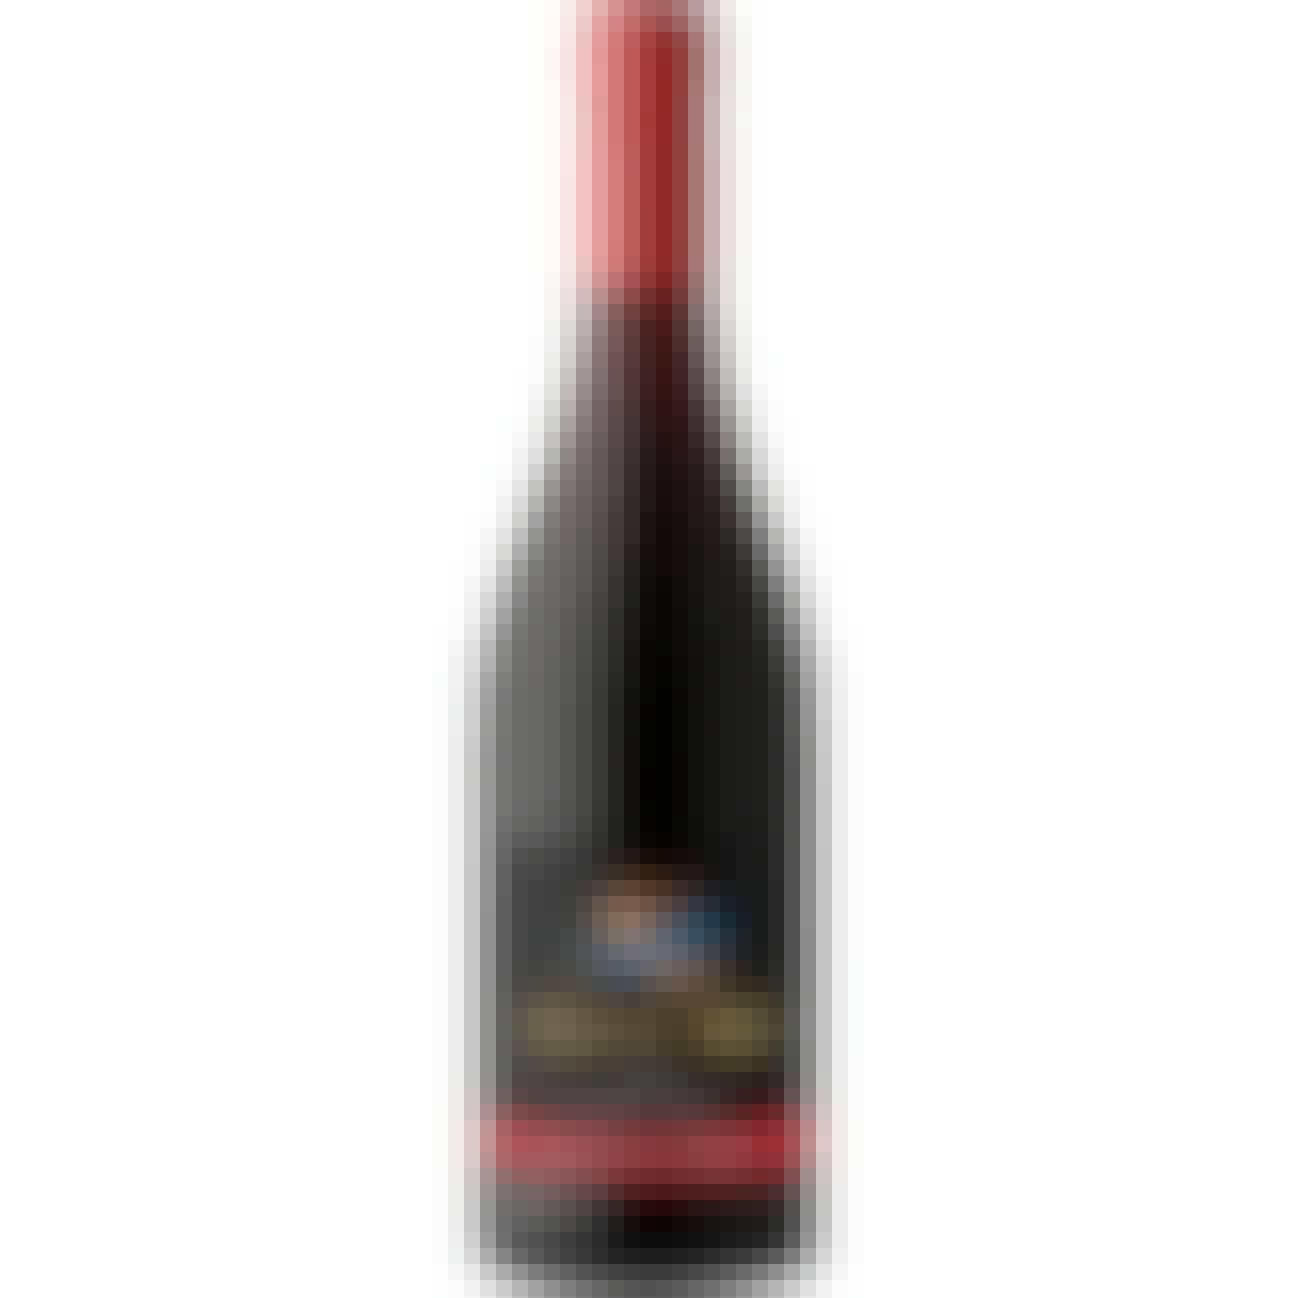 Siduri Santa Rita Hills Pinot Noir 2020 750ml